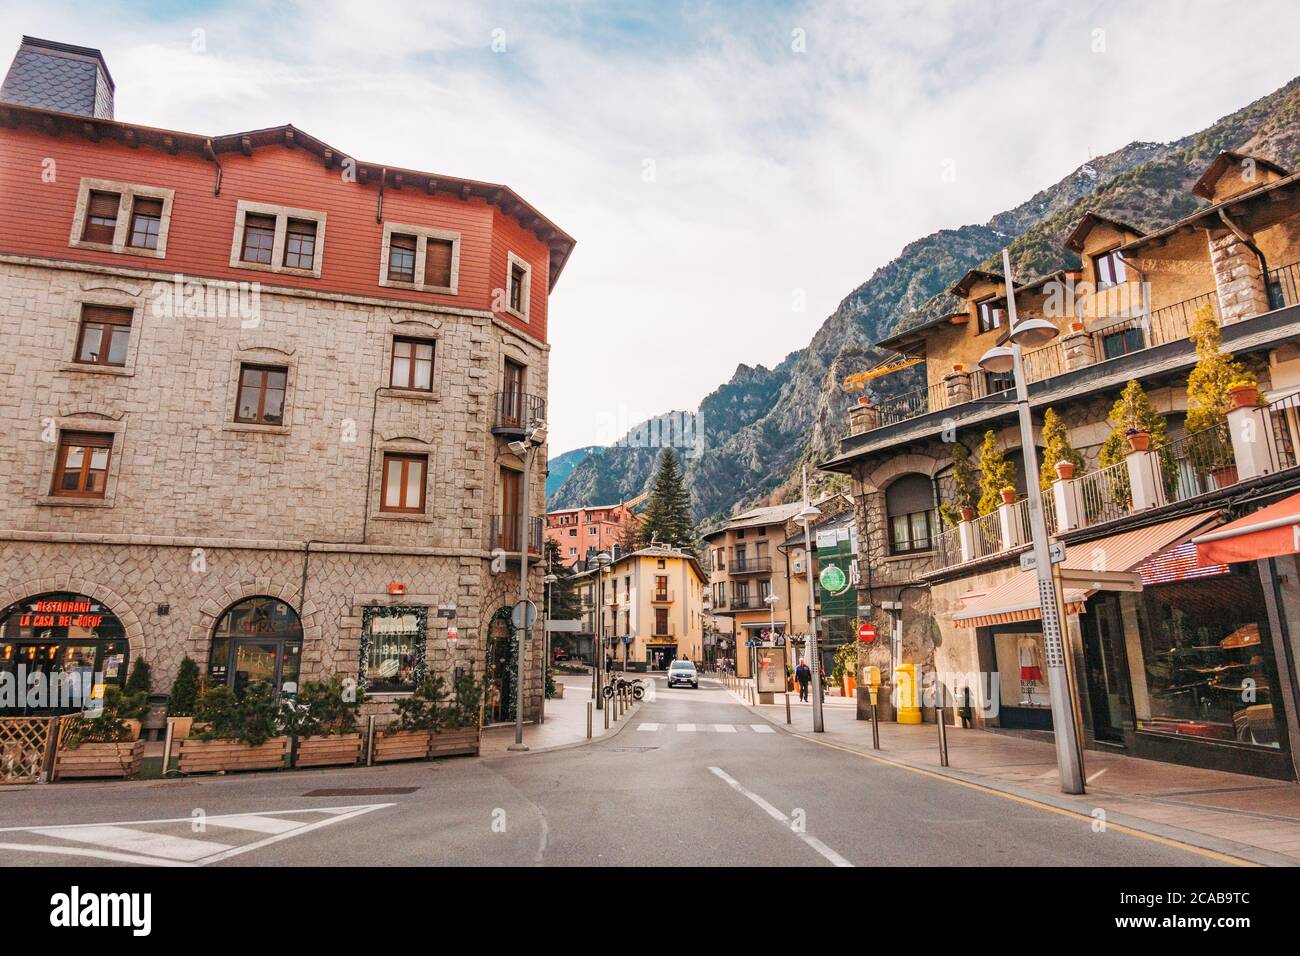 A tidy street corner with old style buildings in Andorra la Vella, Andorra Stock Photo